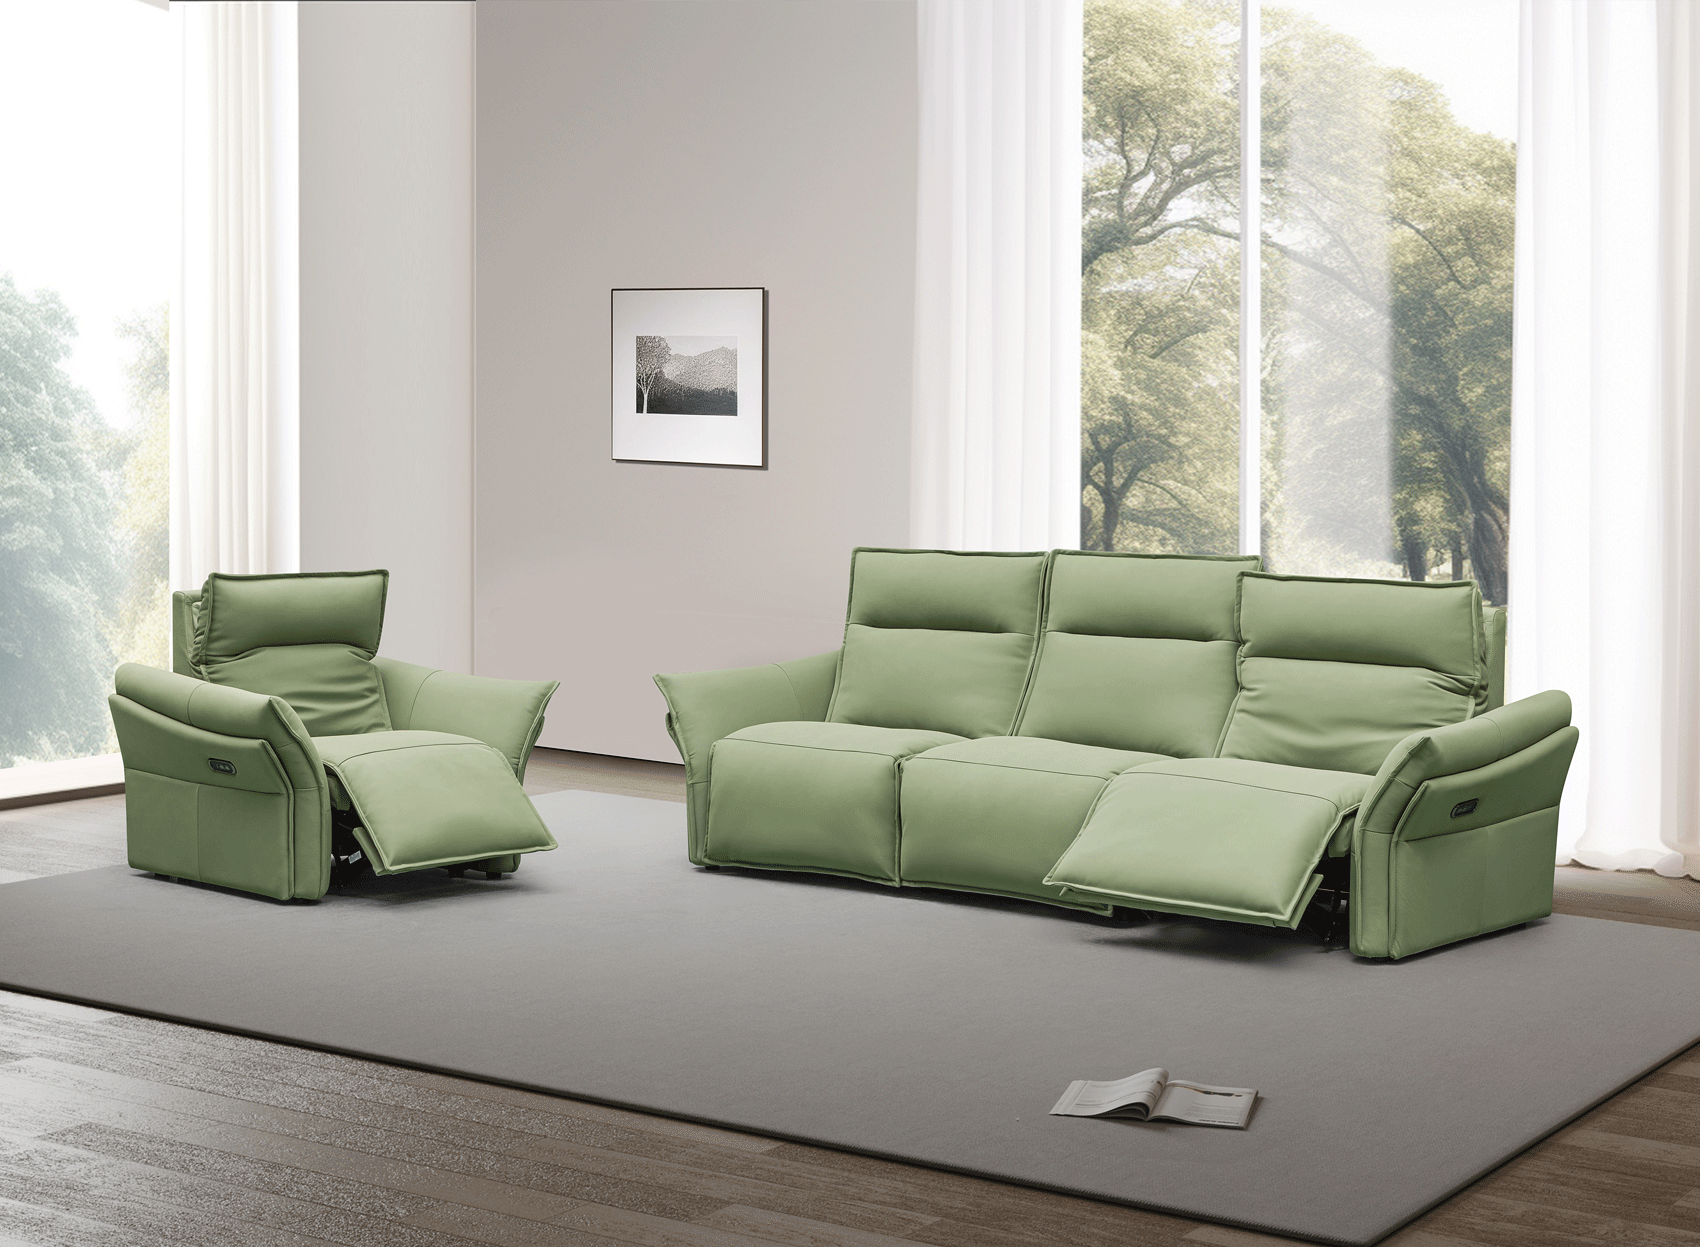 Living Room Furniture Reclining and Sliding Seats Sets GM56 Recliner Set